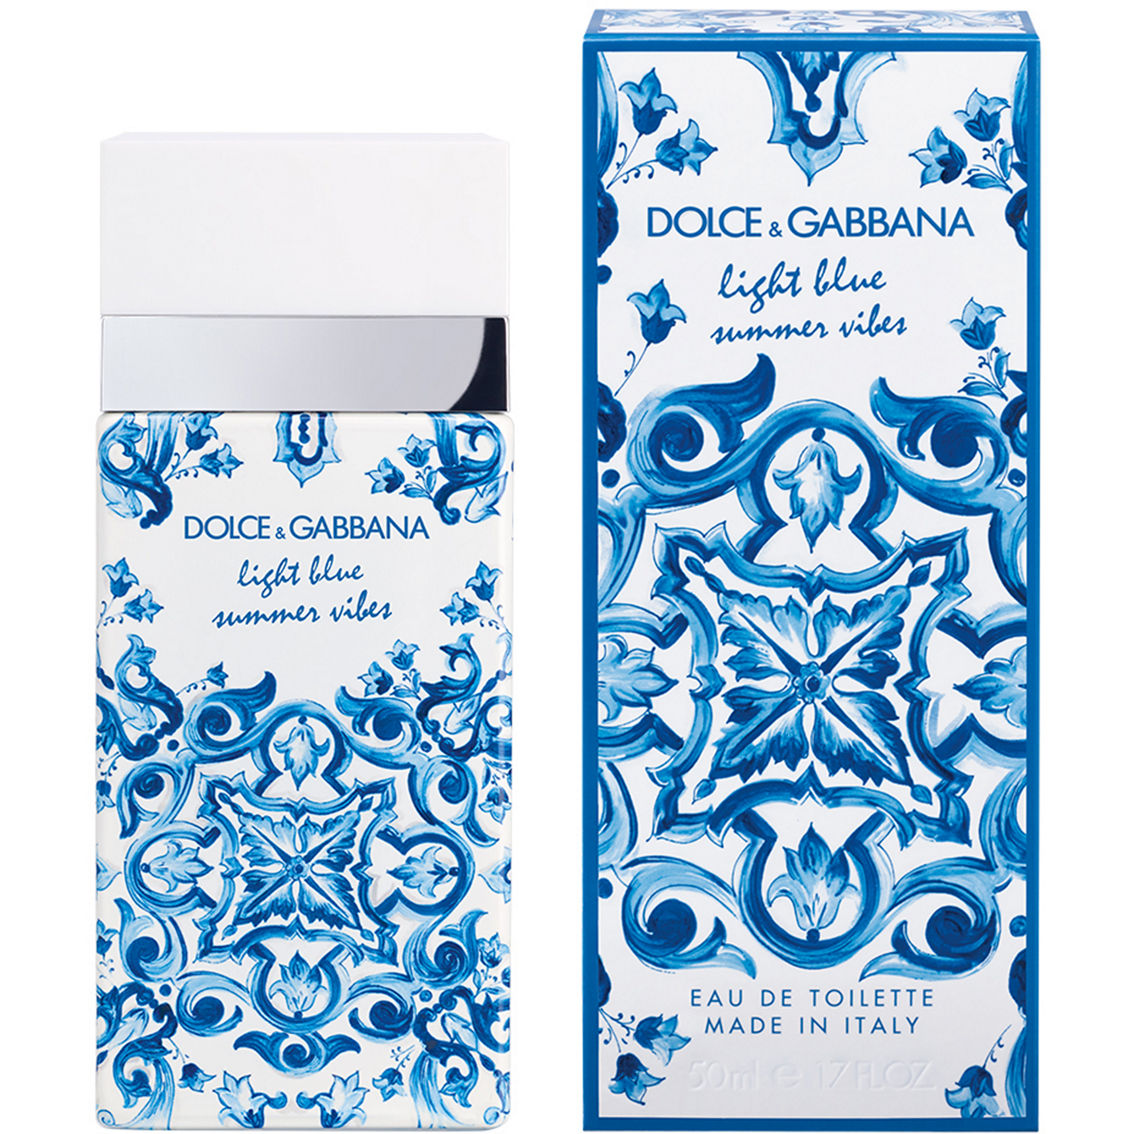 Dolce & Gabbana Light Blue Summer Vibes for Women Eau de Toilette Spray - Image 2 of 4